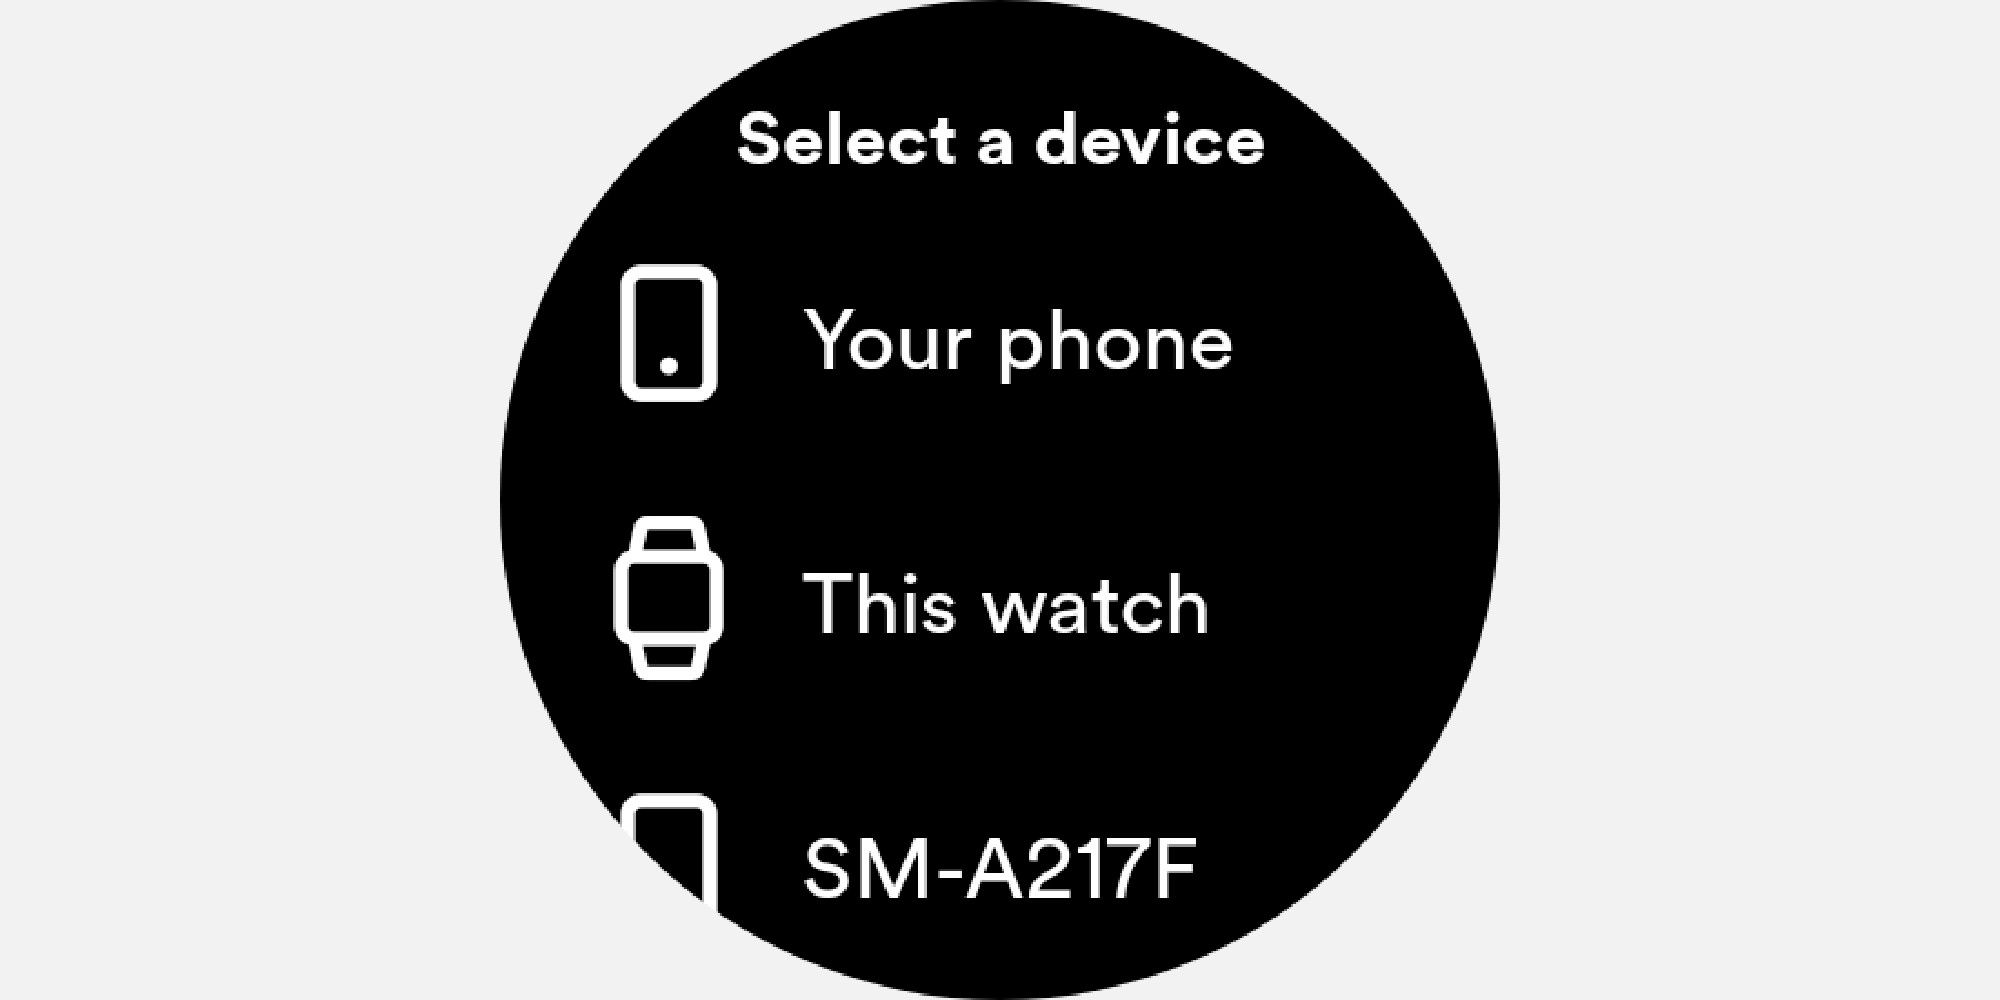 Device Options in Galaxy 4 Smartwatch Dropdown Menu